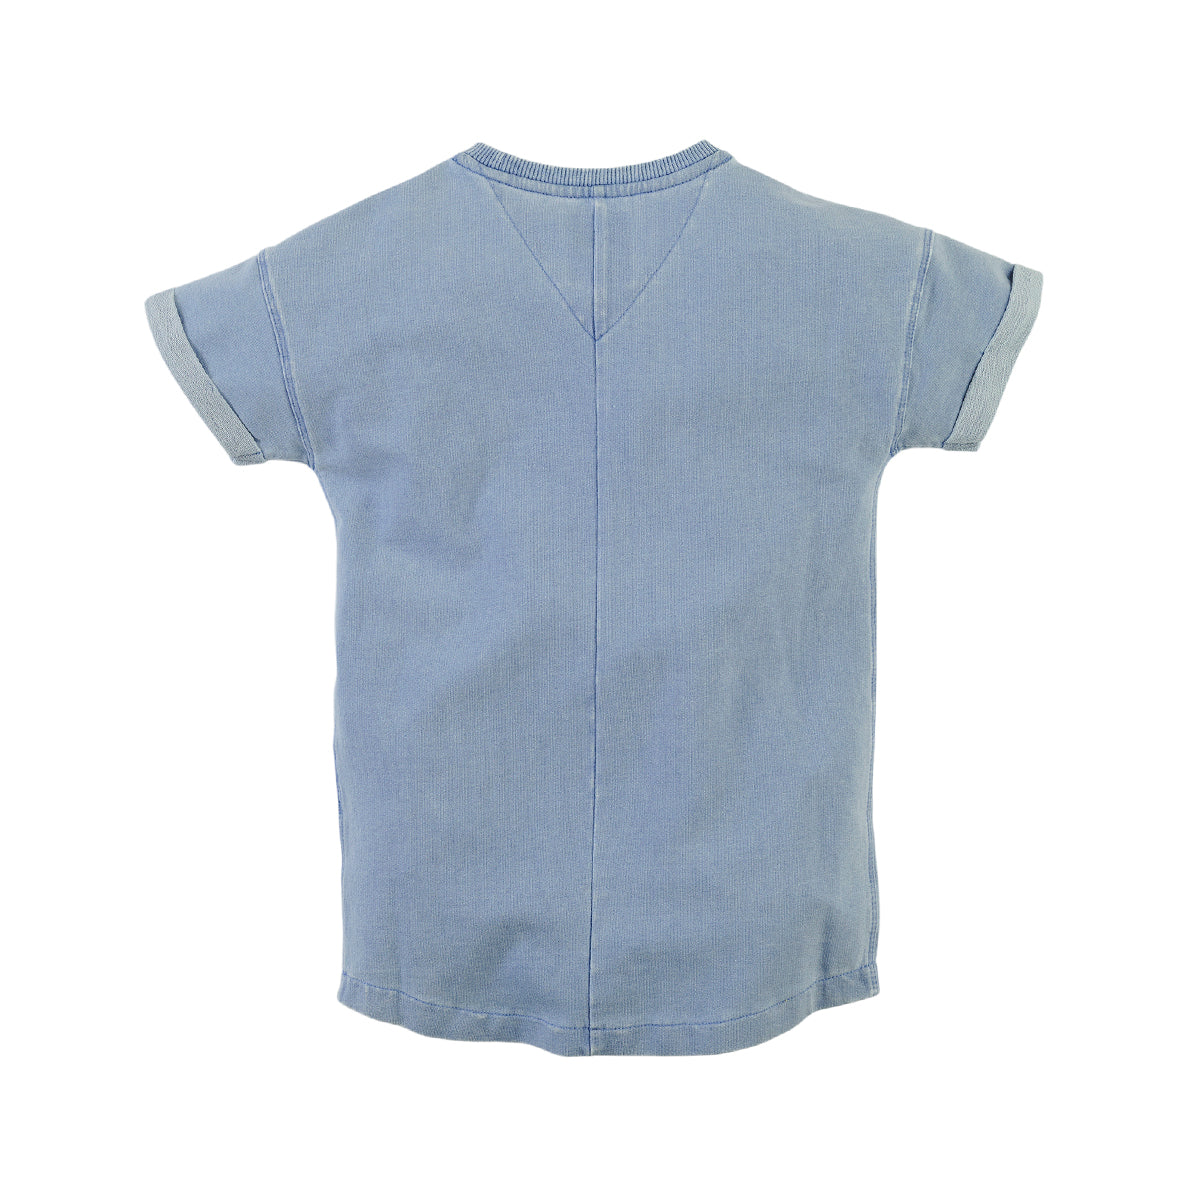 Z8 Shirt short sleeve Olly S22 Cool blue